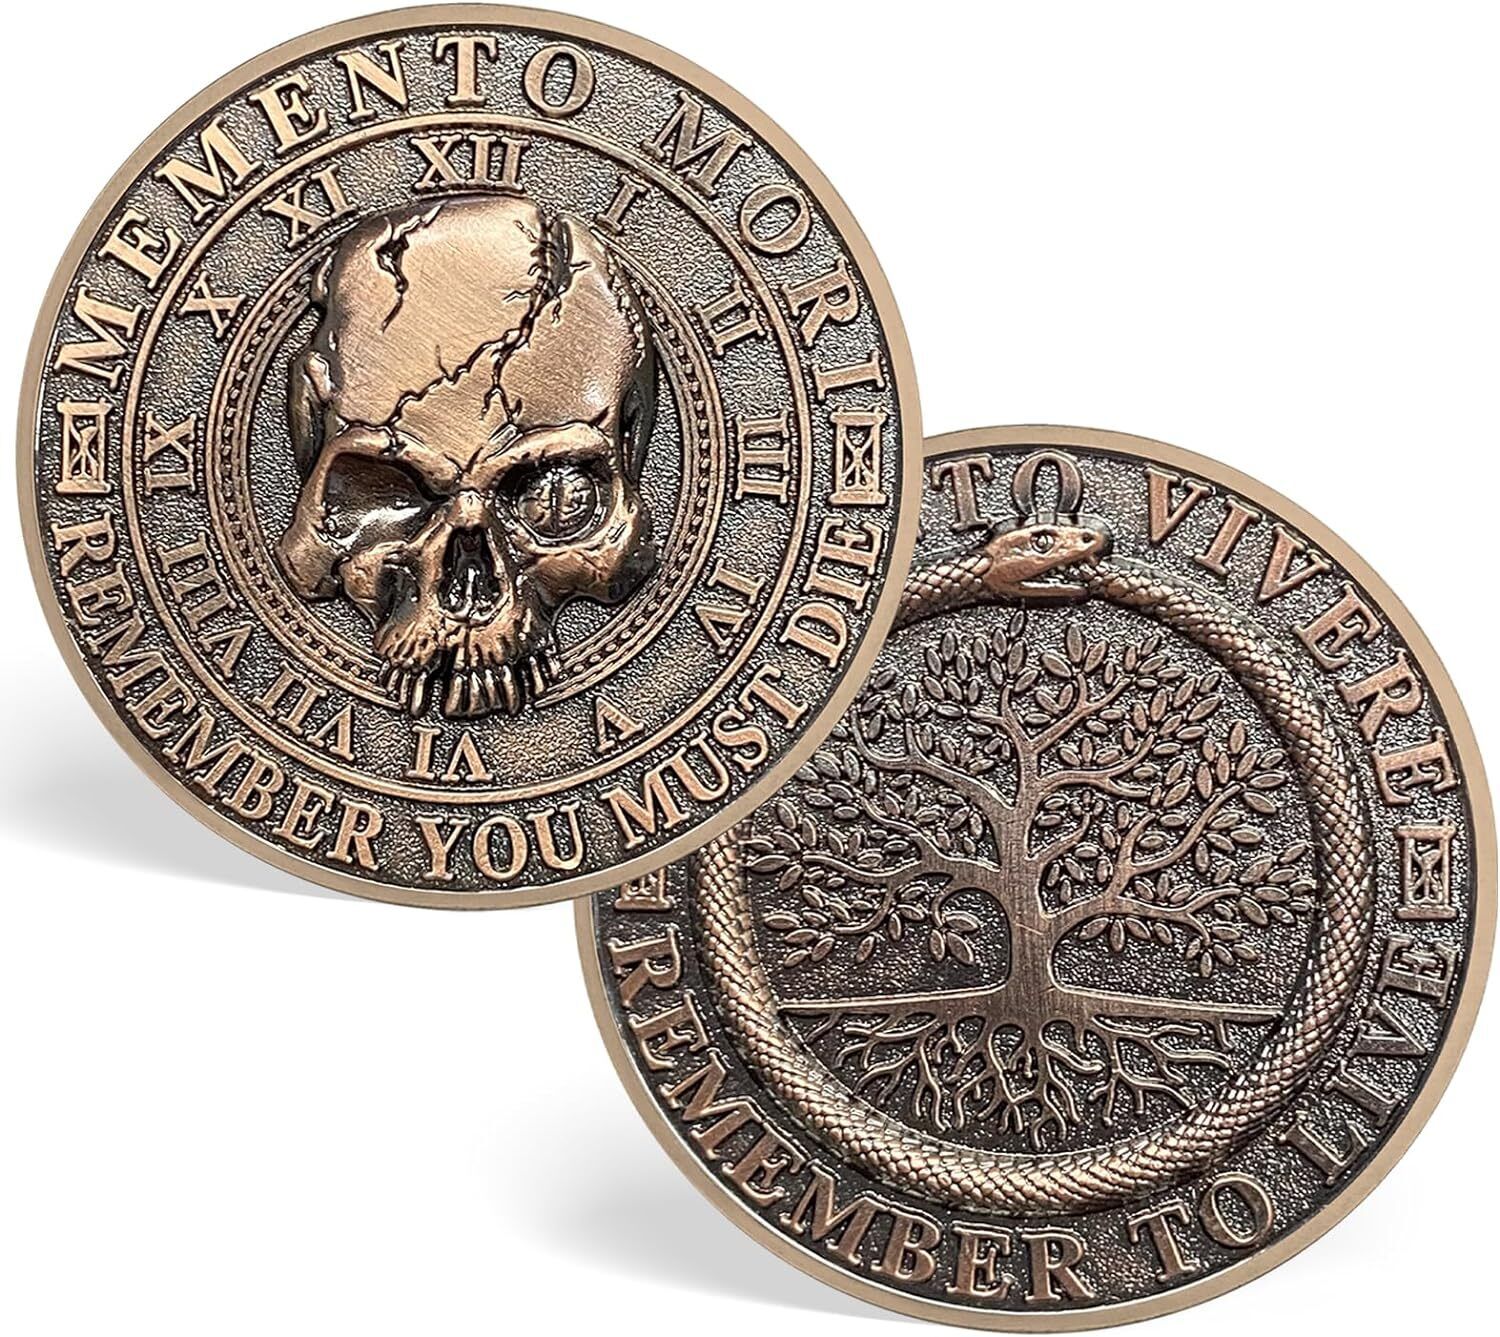 Memento Mori Memento Vivere Coin 3D Skull Challenge Coin Stoic Reminder Token